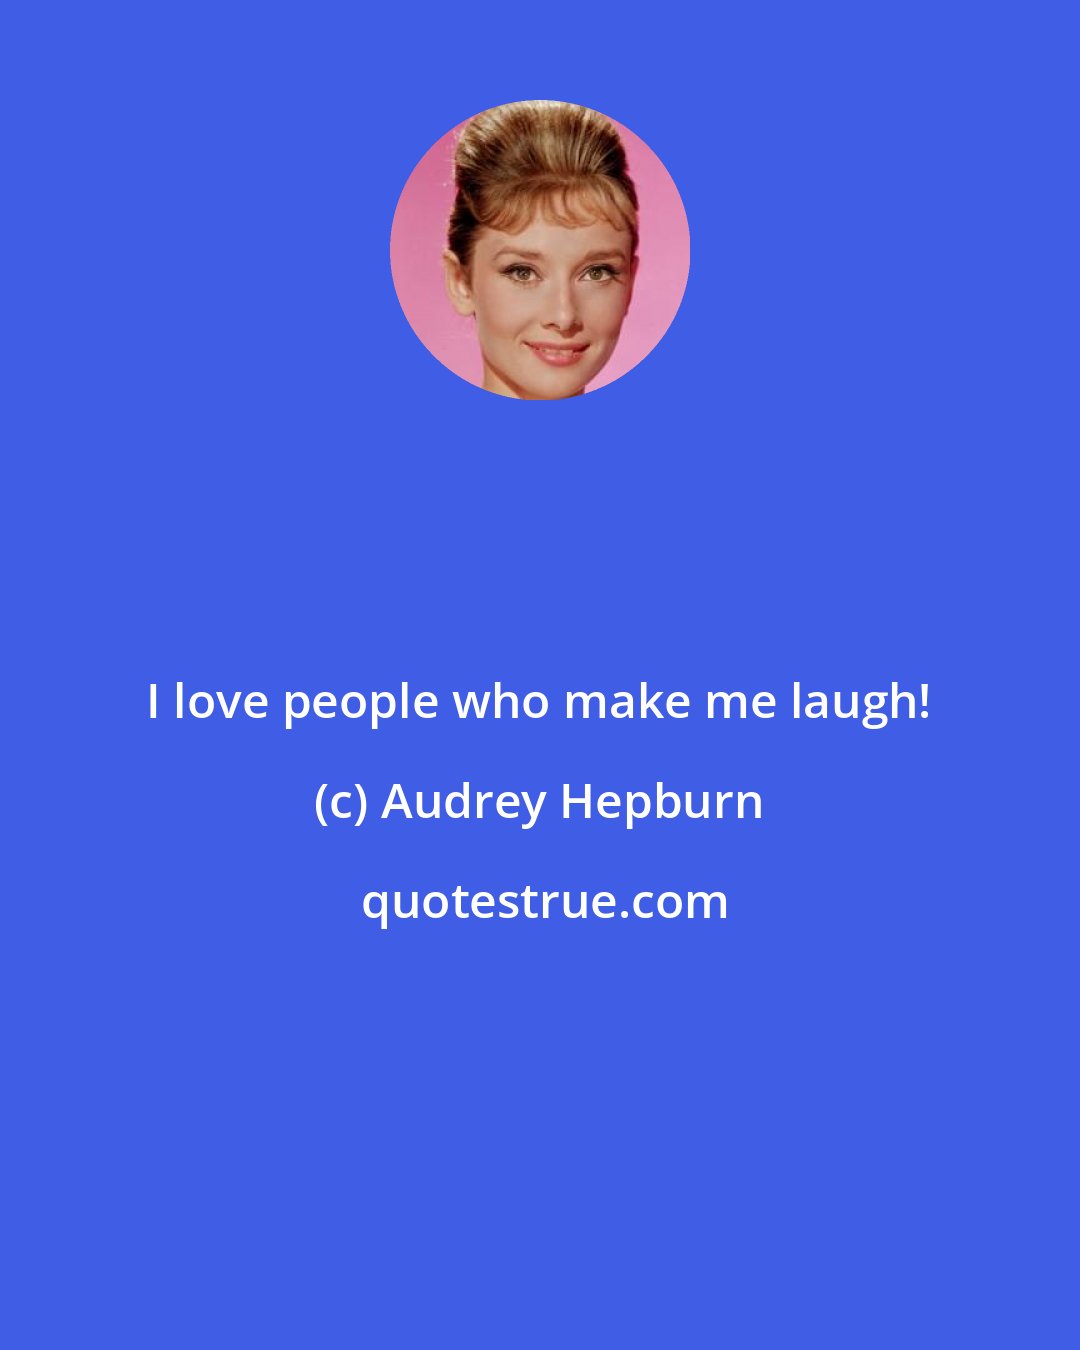 Audrey Hepburn: I love people who make me laugh!